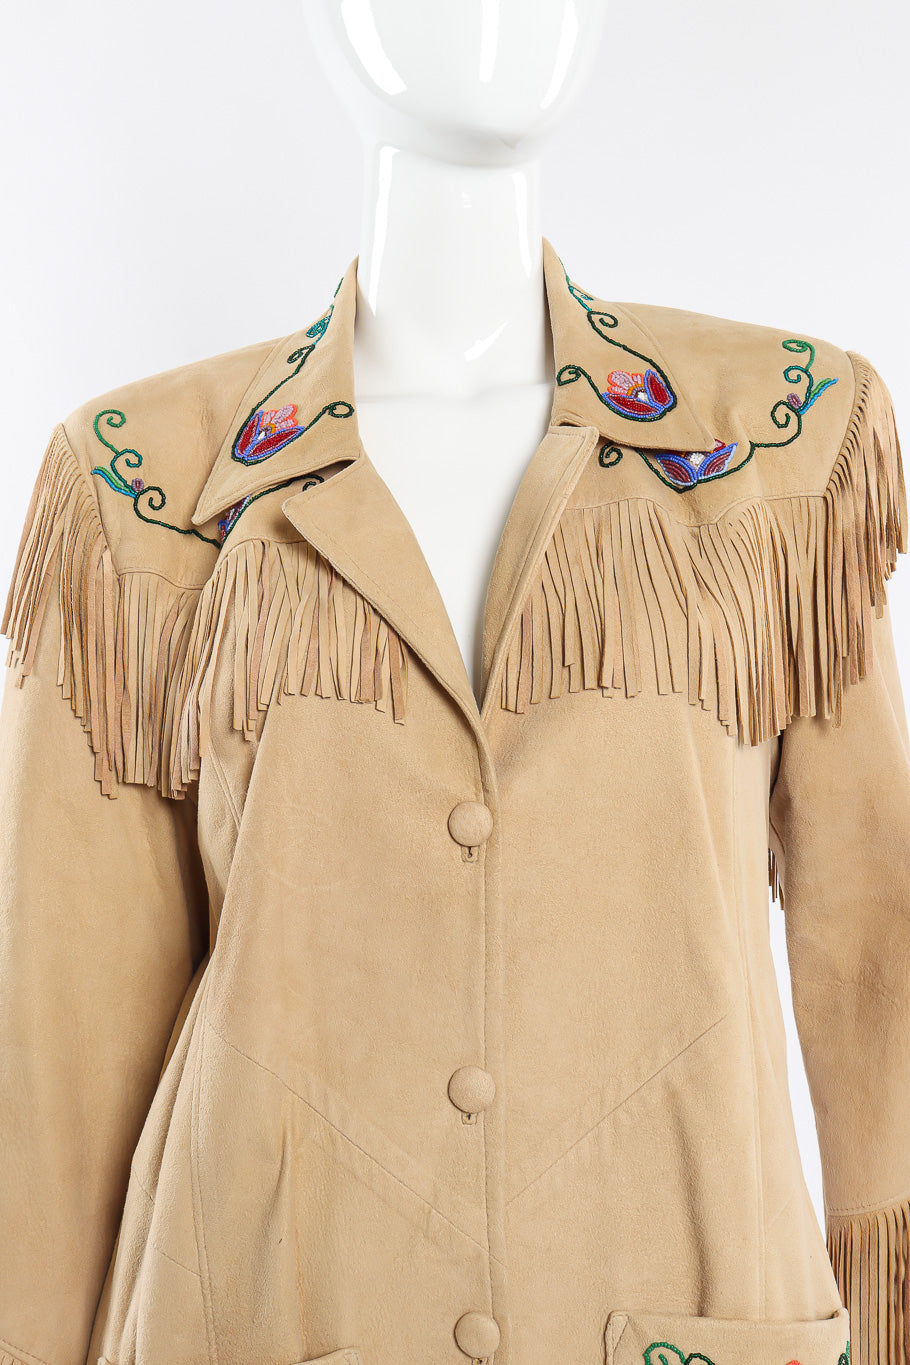 Vintage Char suede fringe jacket front view closeup on mannequin @Recessla